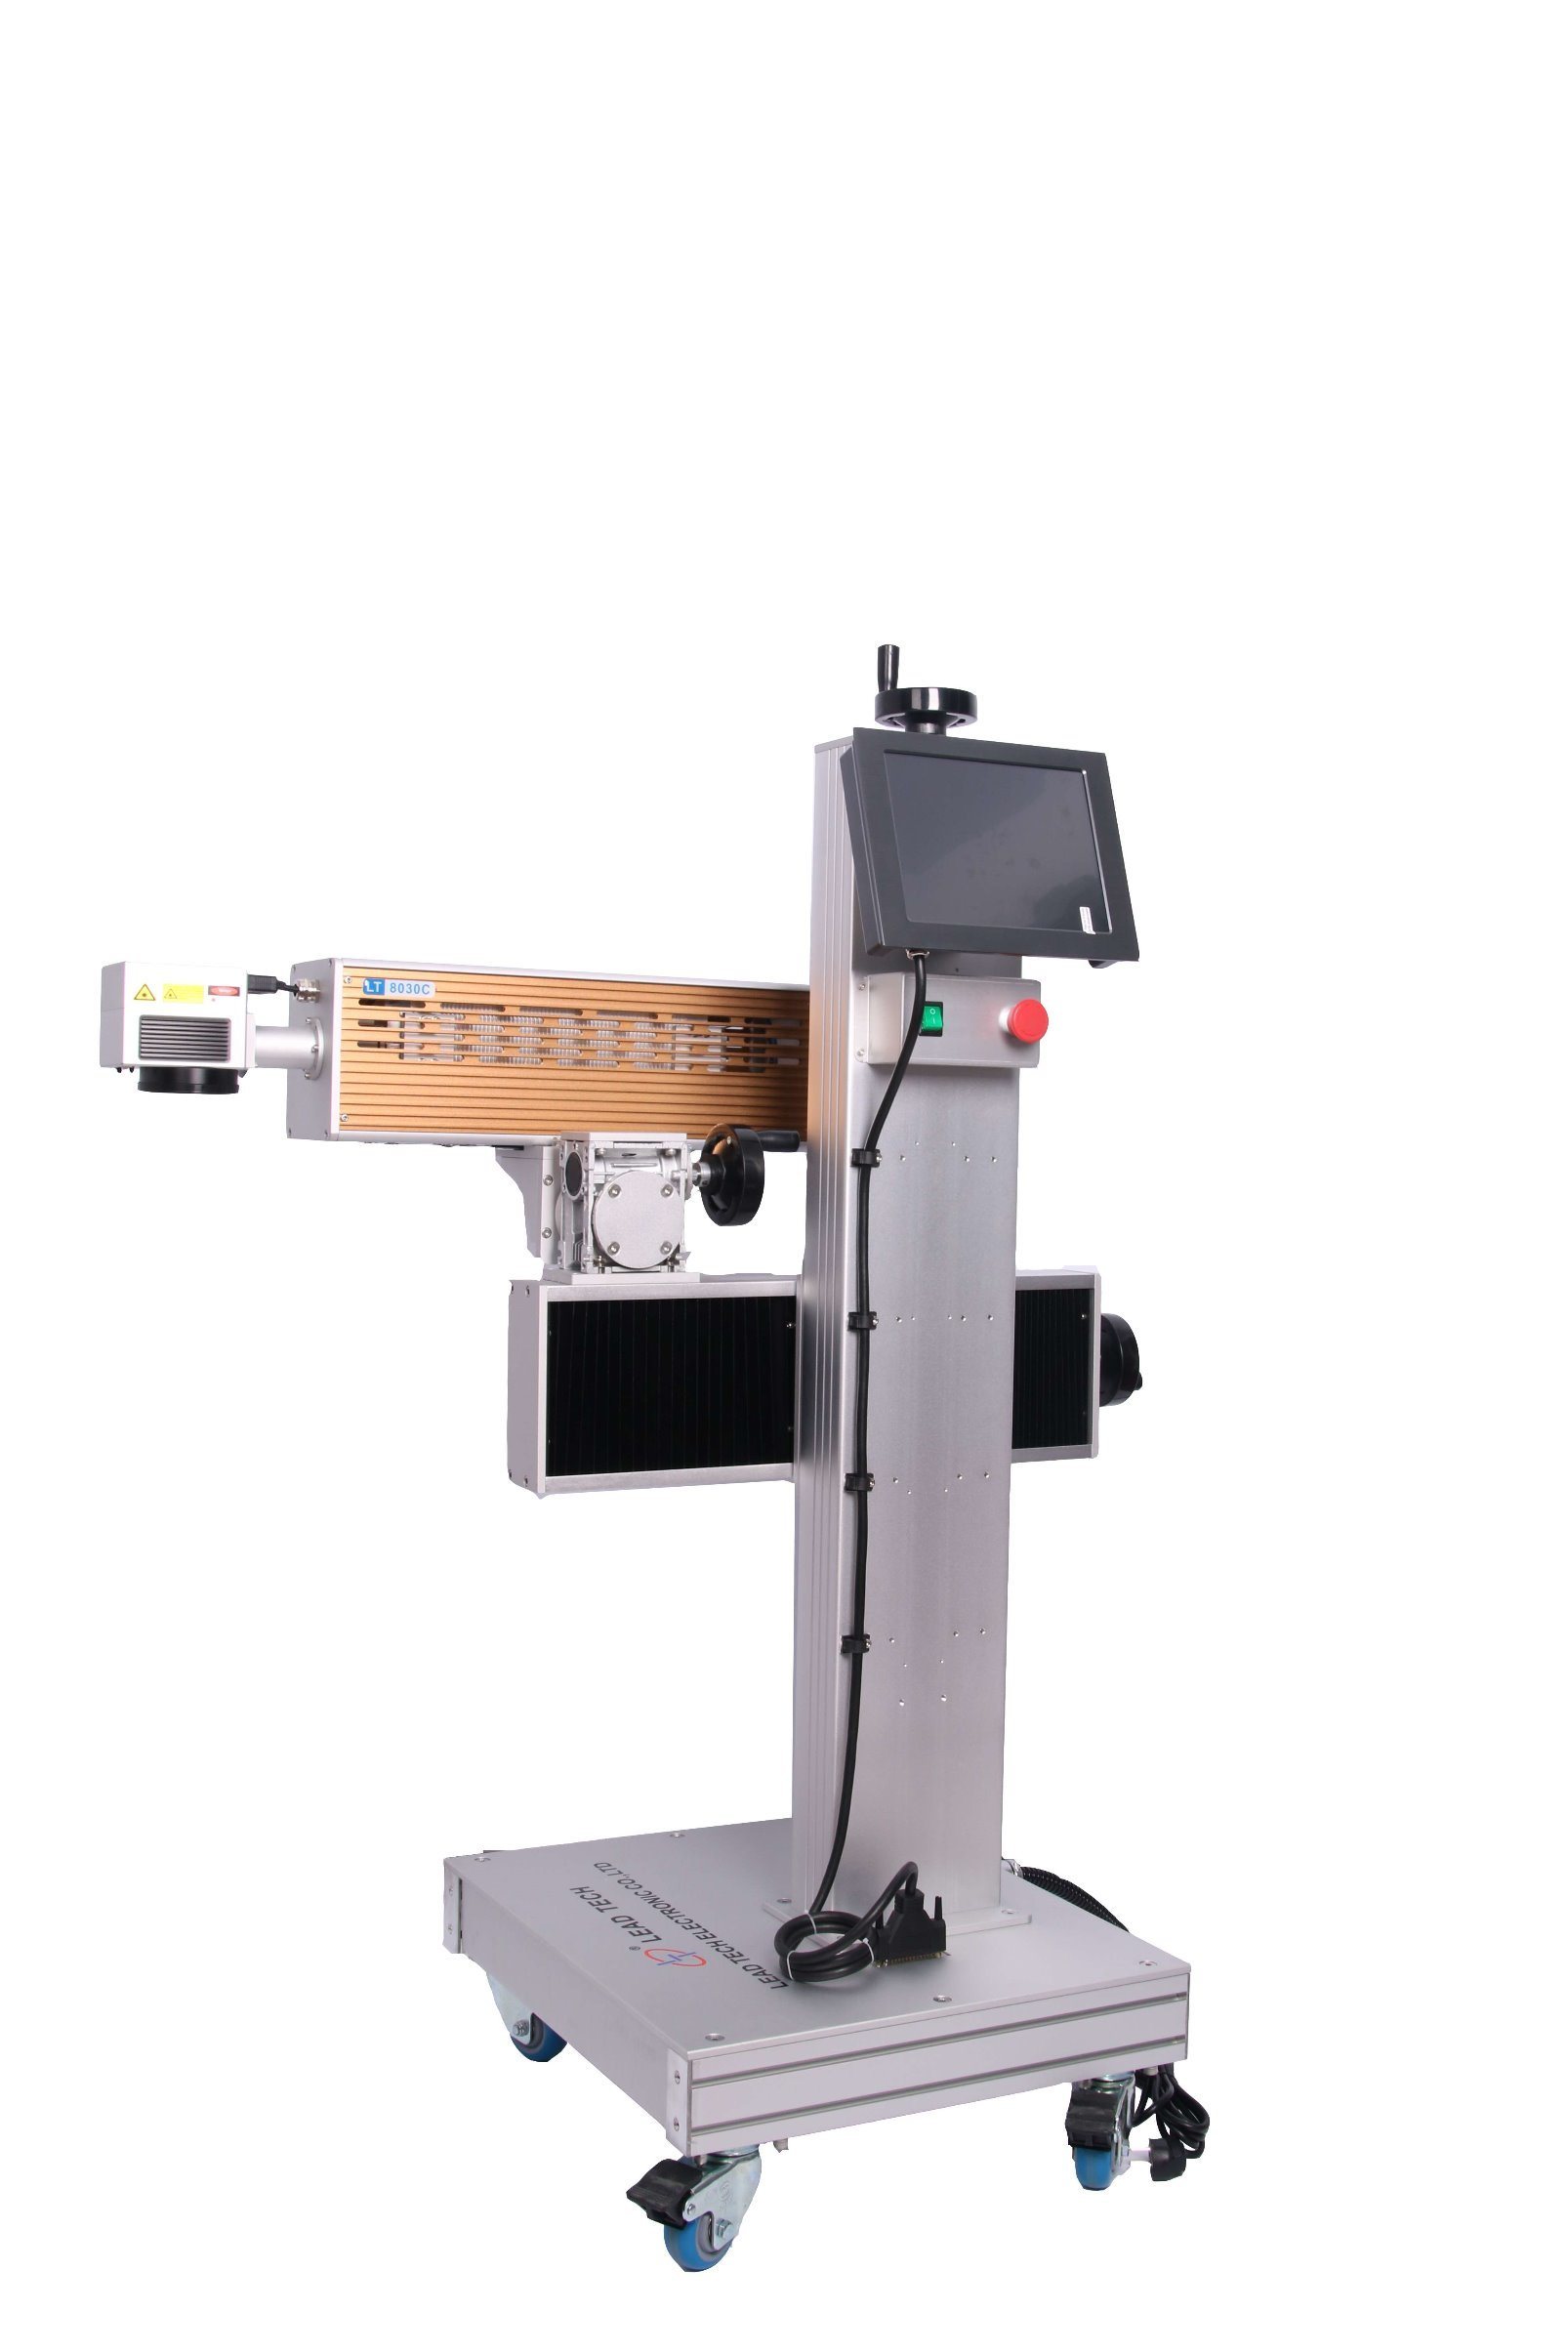 Lt8020c/Lt8030c CO2 High Performance Digital Laser Marking Printer for Plate Silver Gold Printing